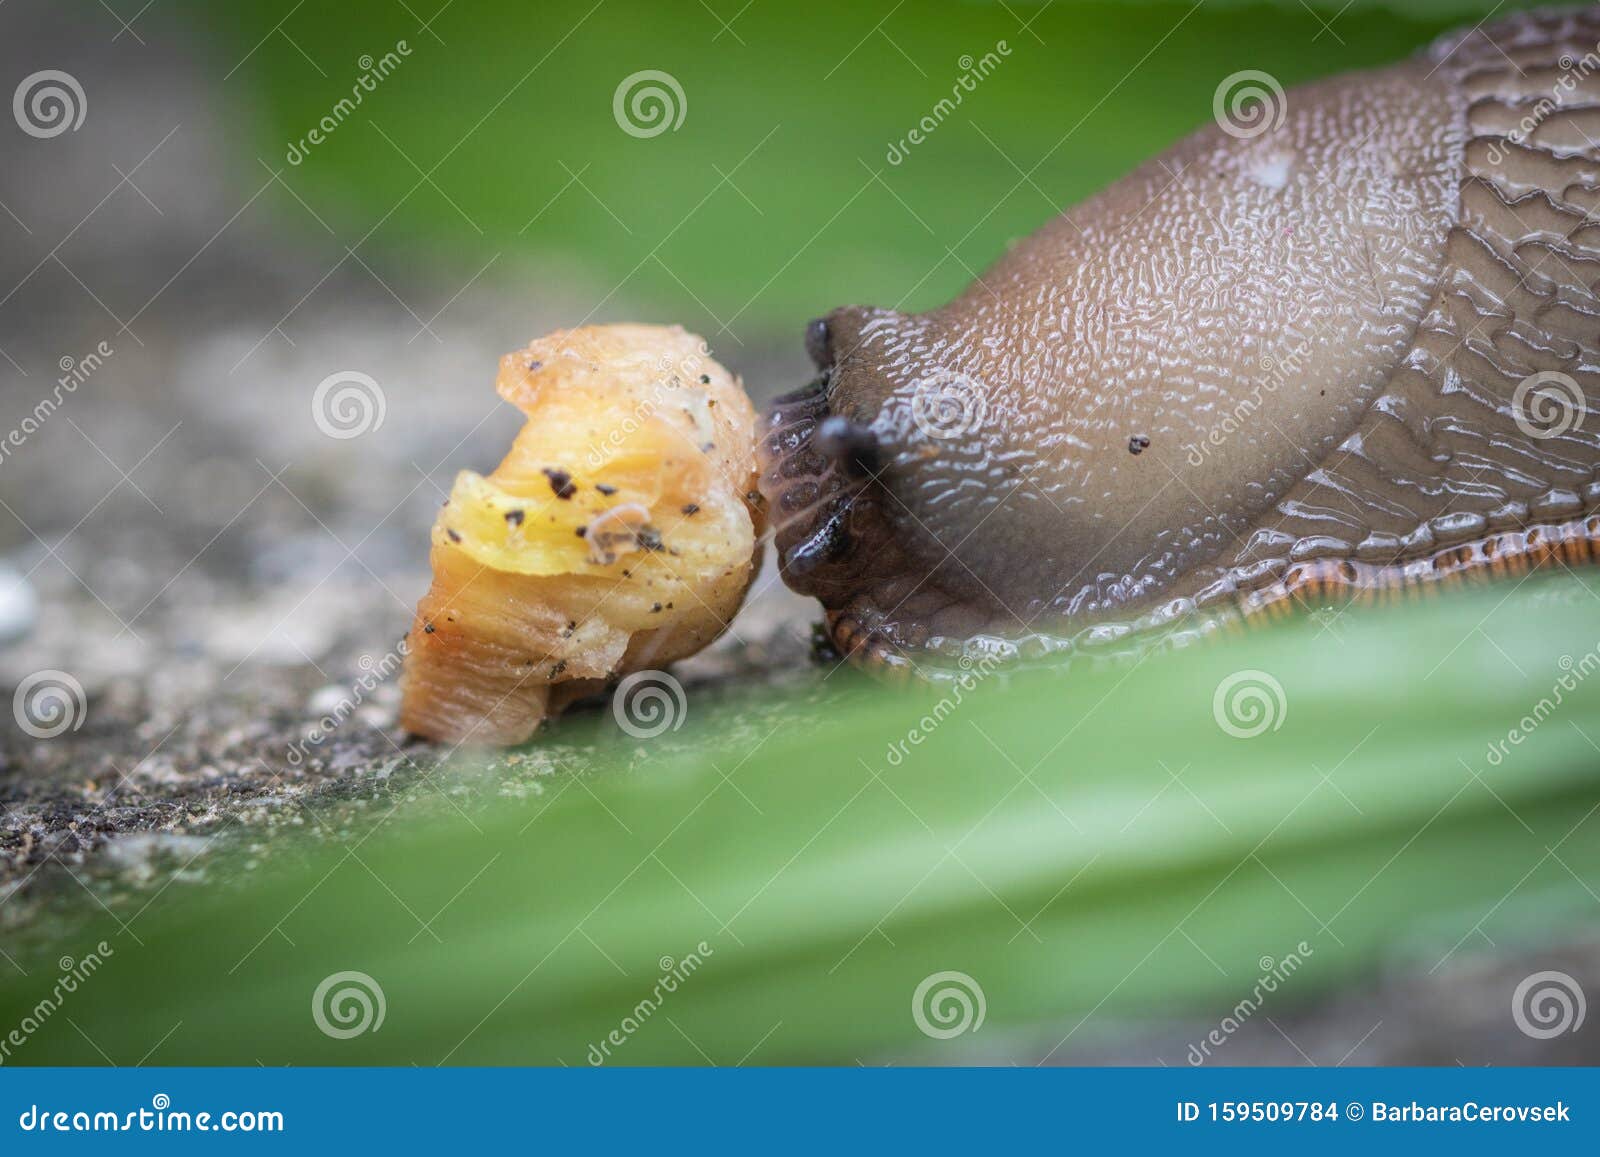 funny hungry gourmand snail slug eating cep mushroom macro close up